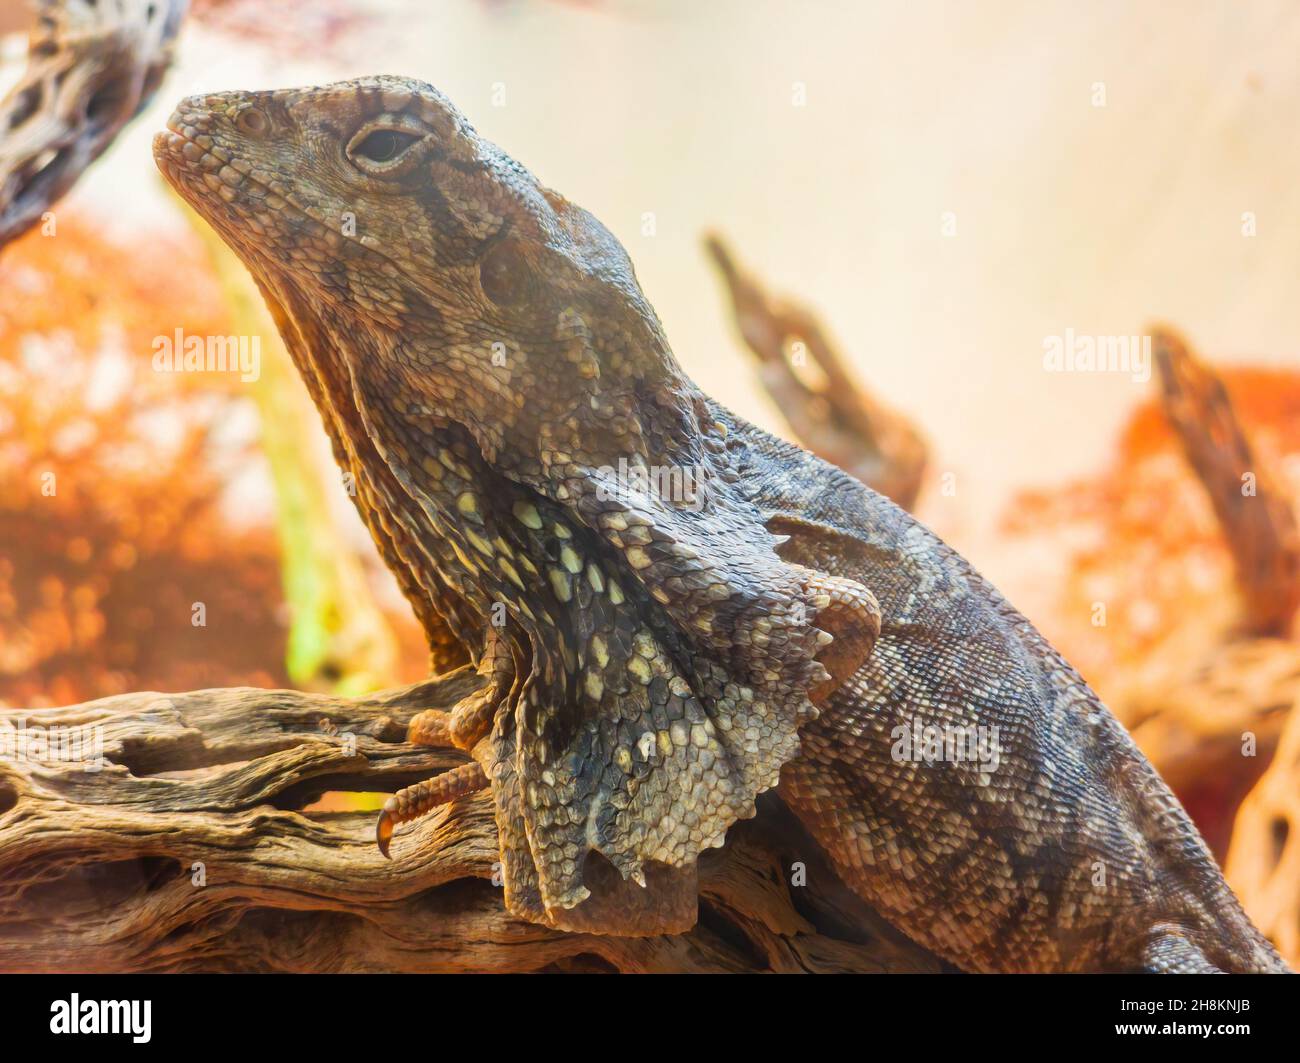 Close up shot of cute Frilled Lizard at Oklahoma Stock Photo